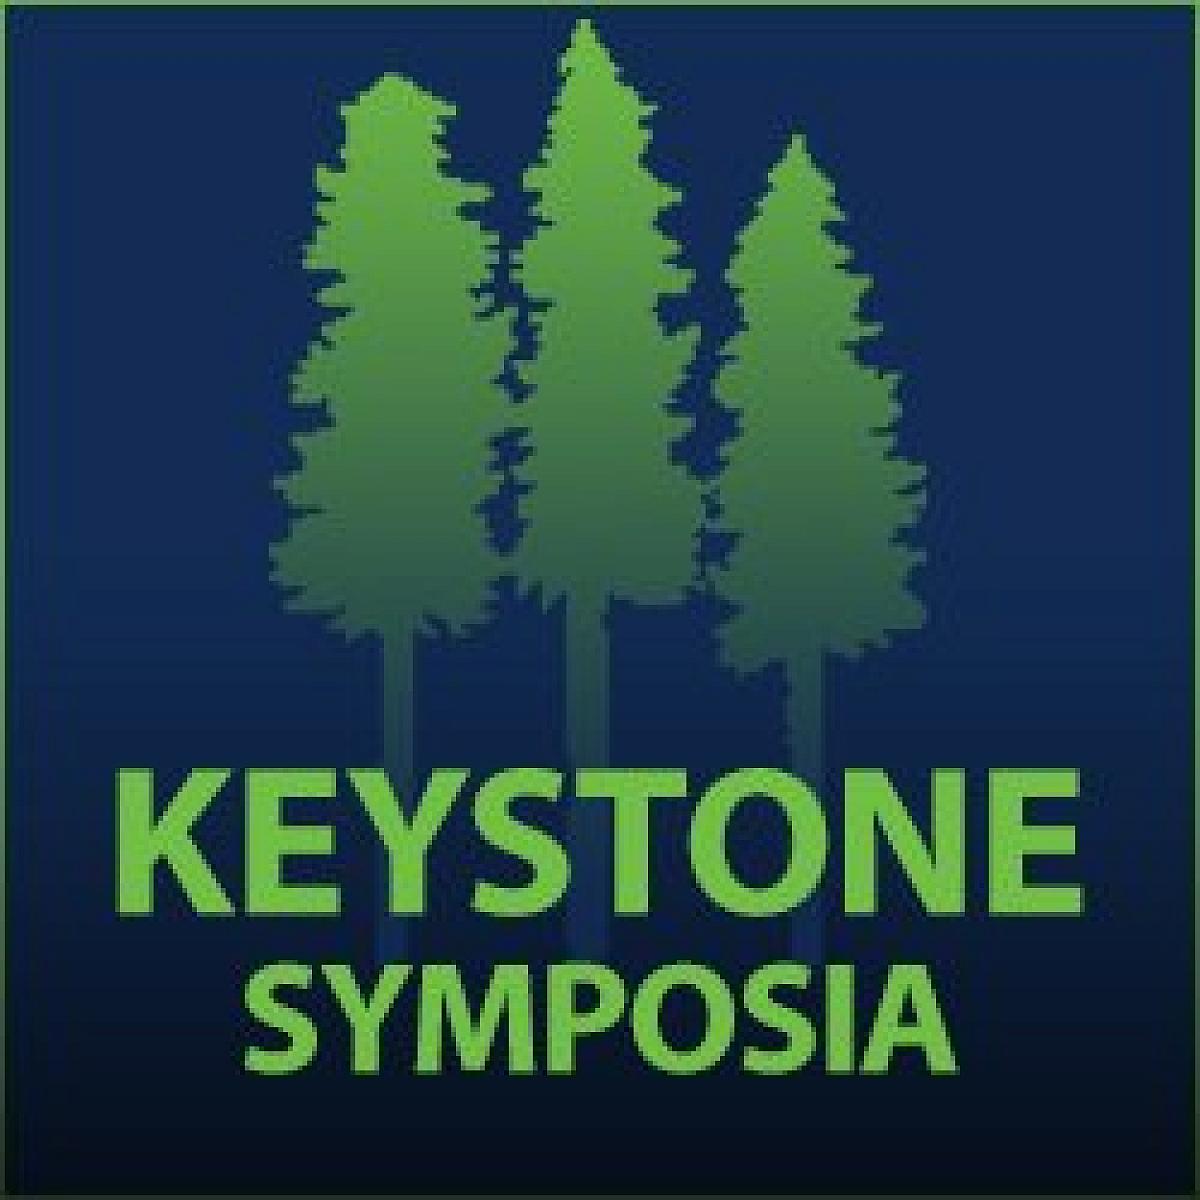 keystone symposia logo